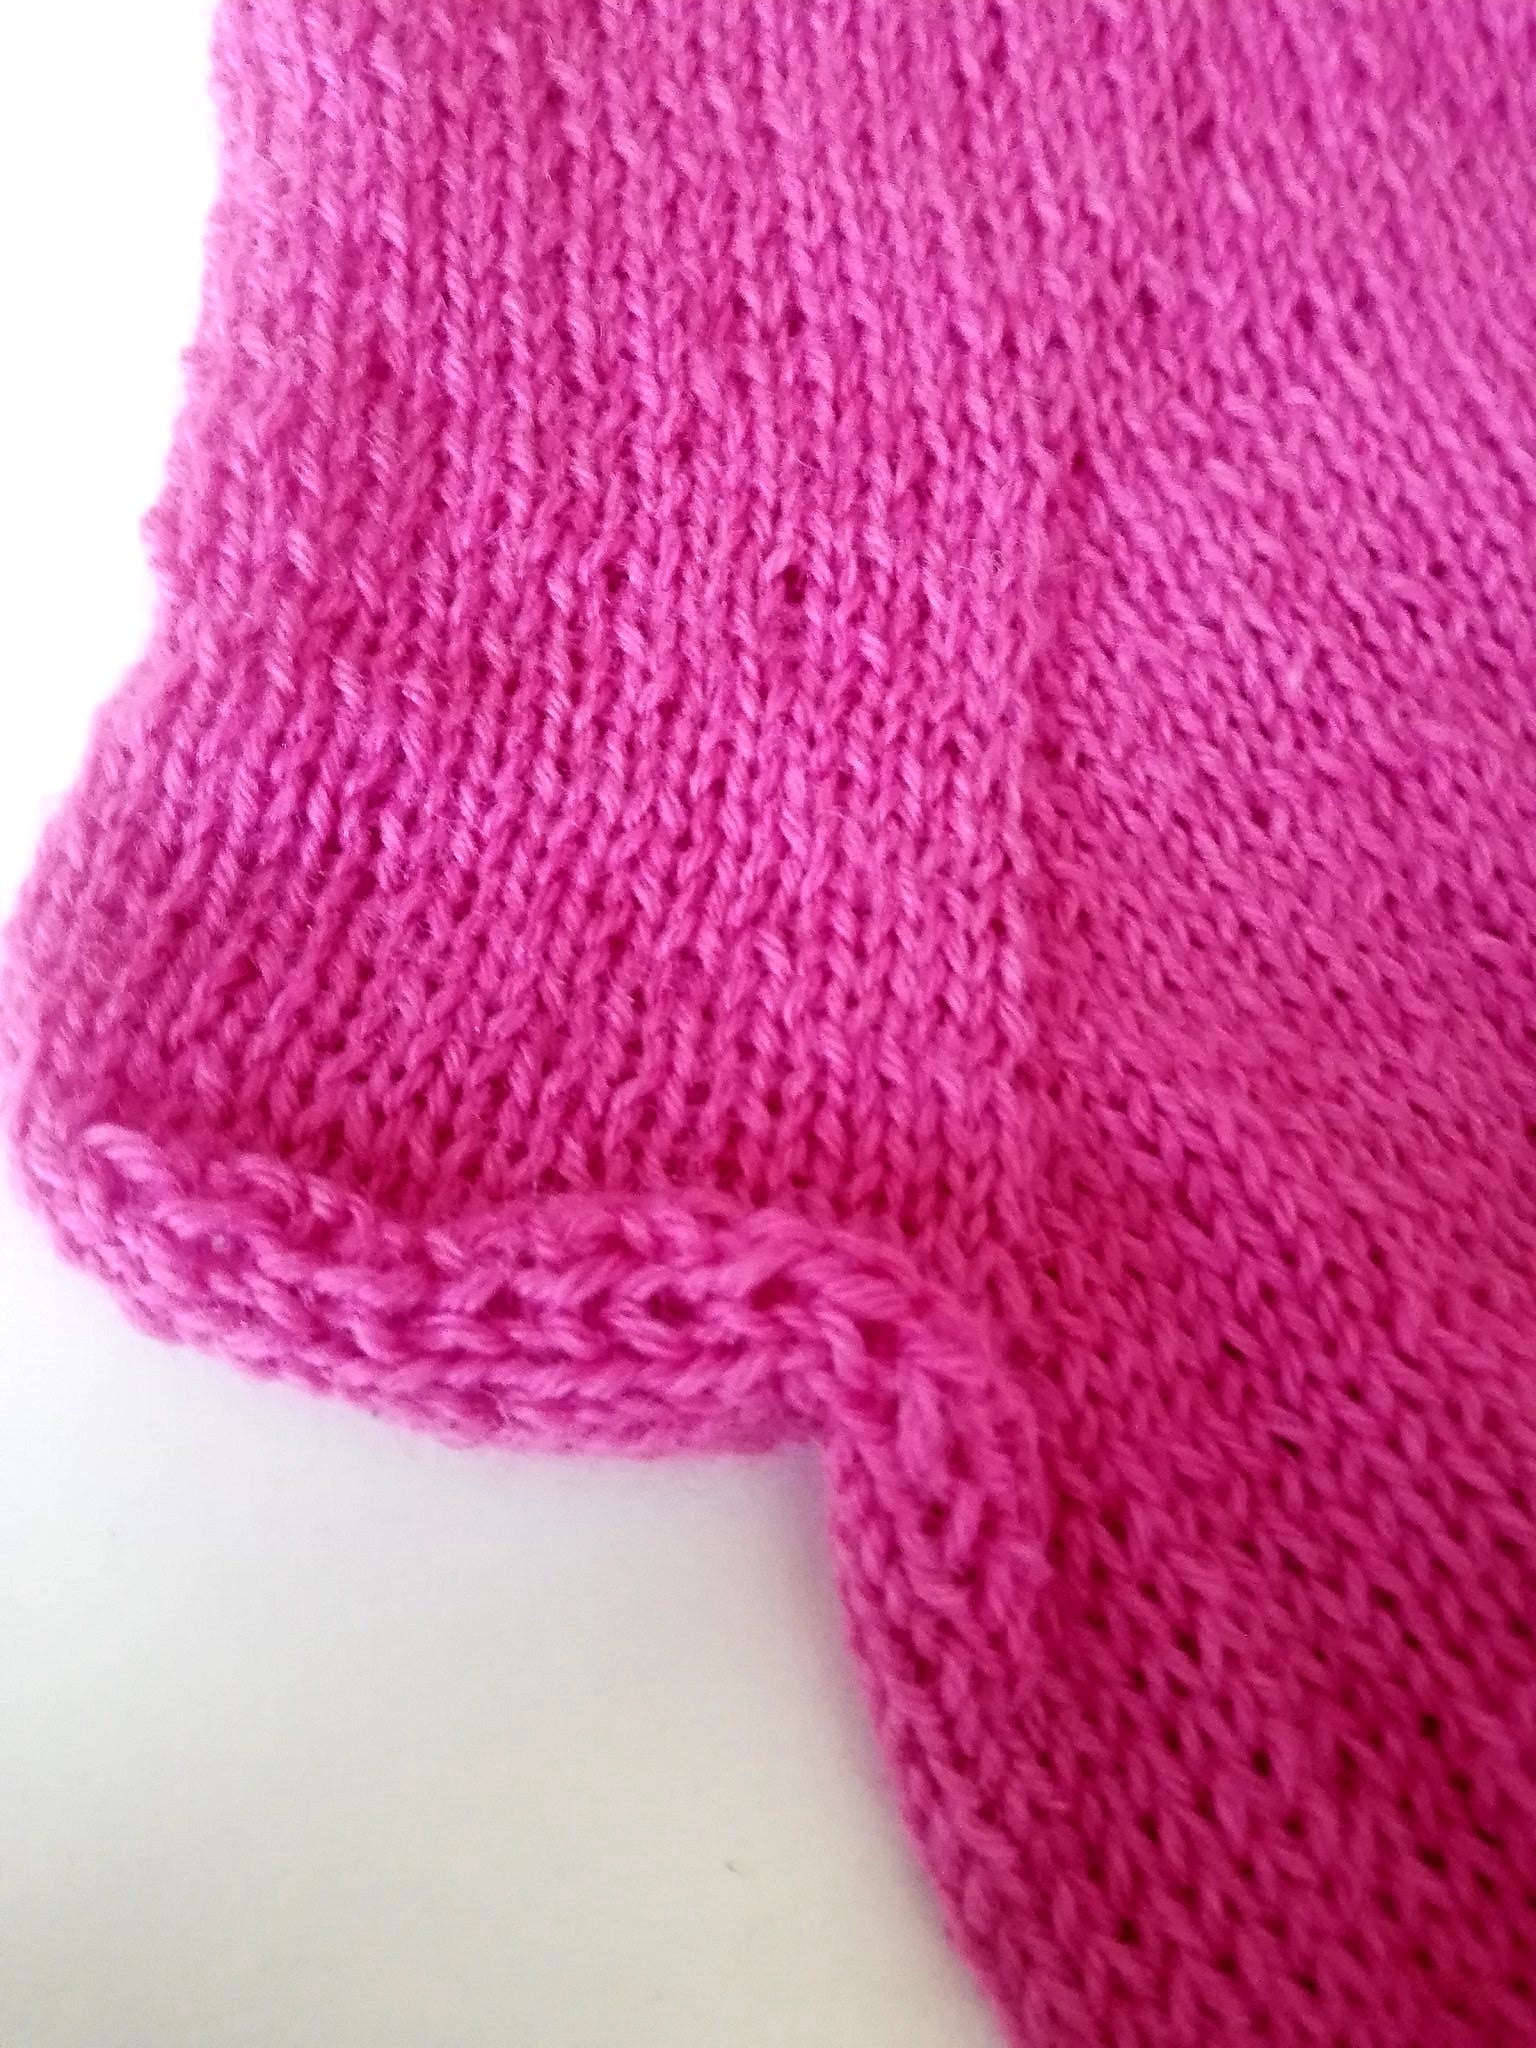 socks knit on 2 needles. 